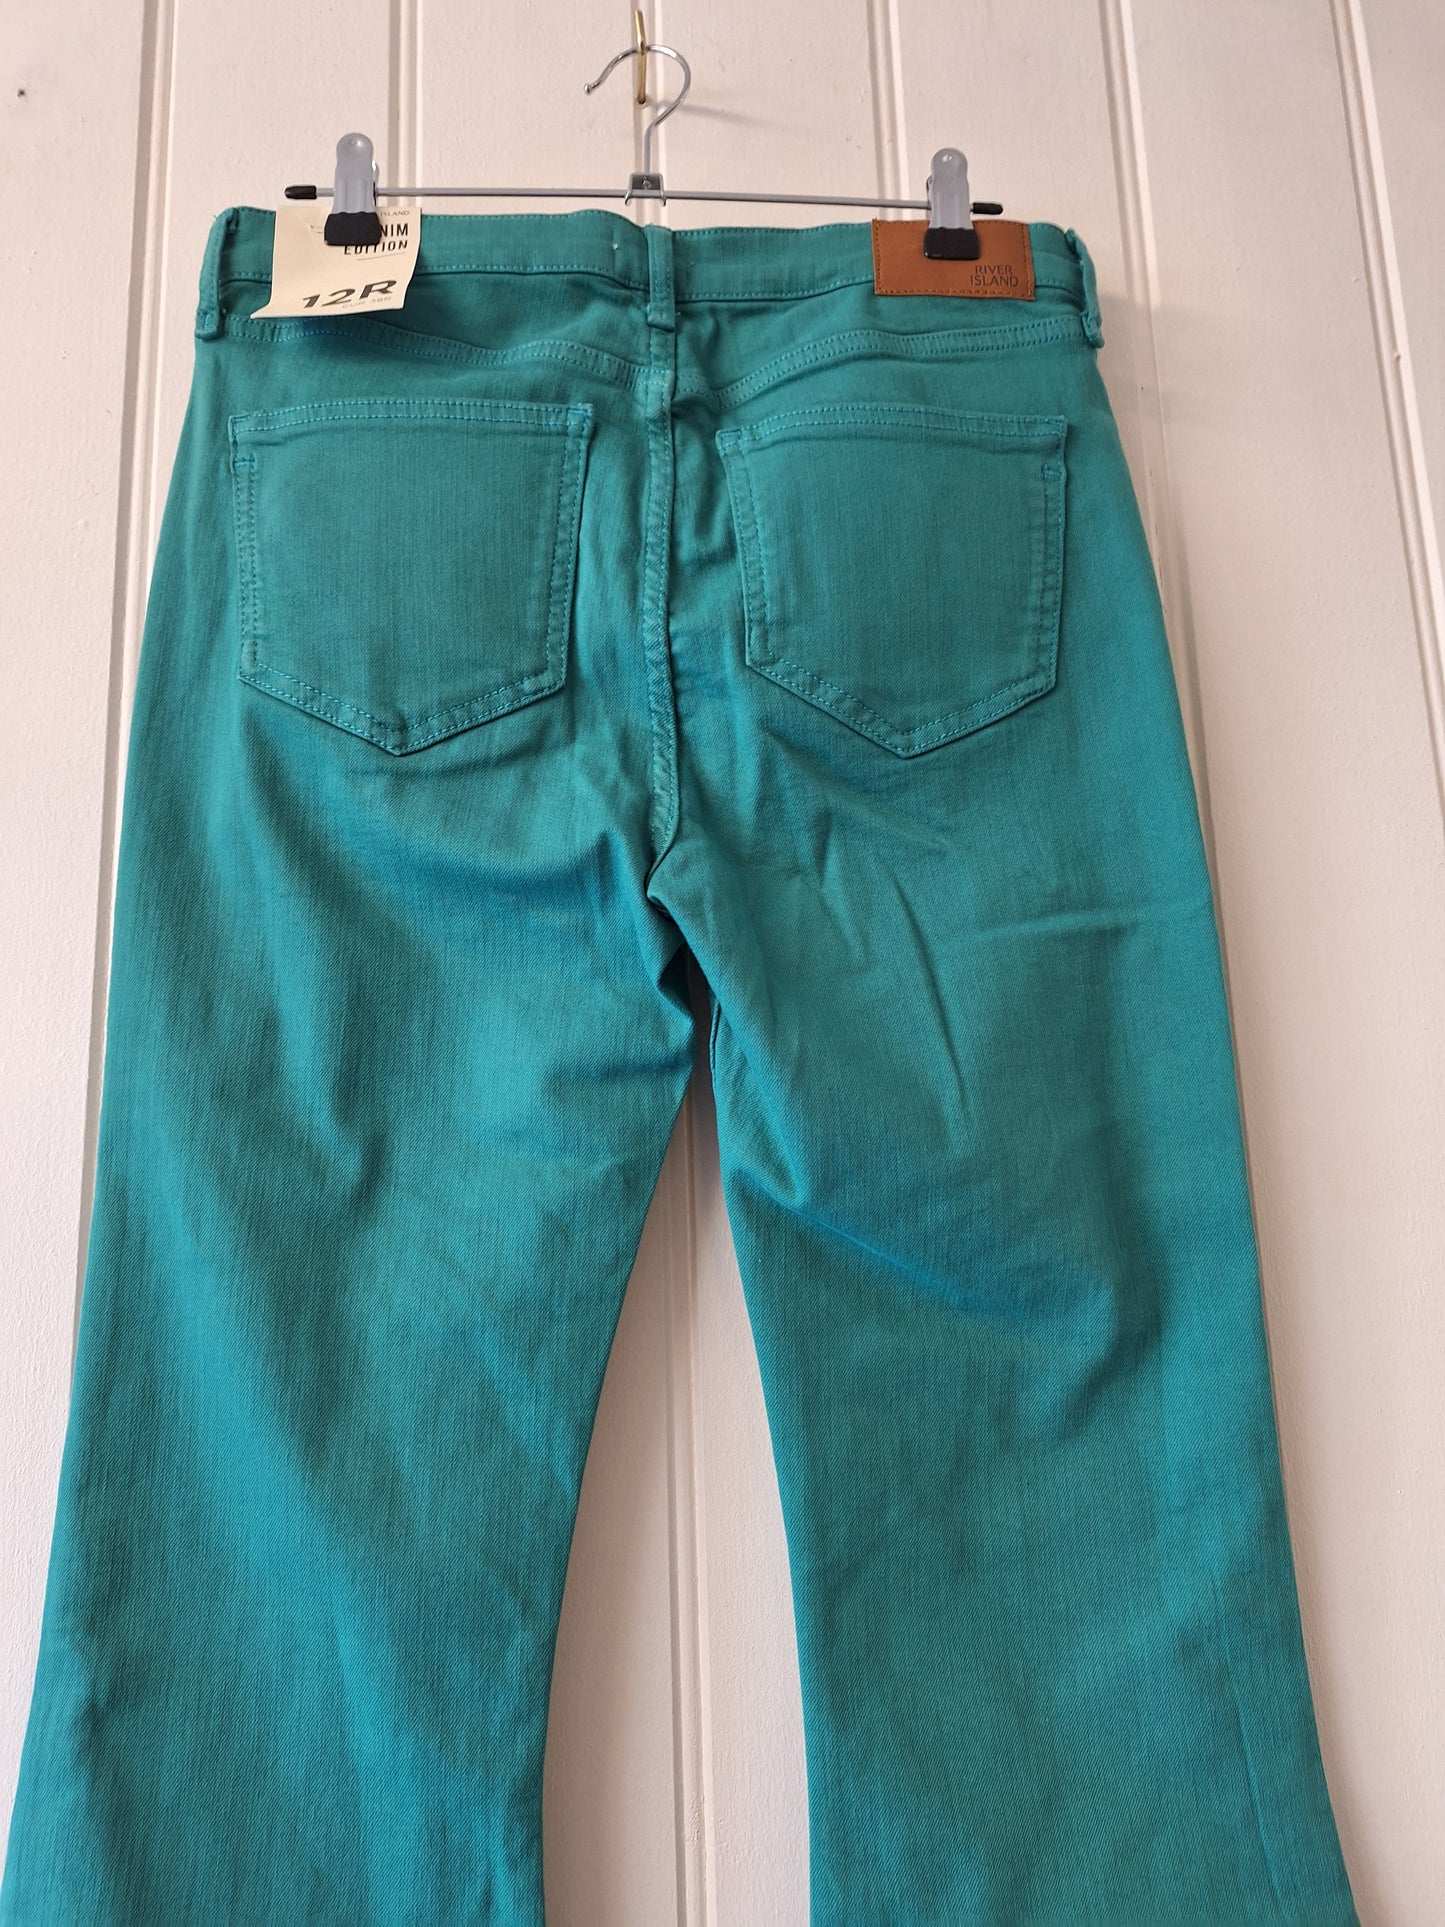 River Island green frayed hemline jeans 12